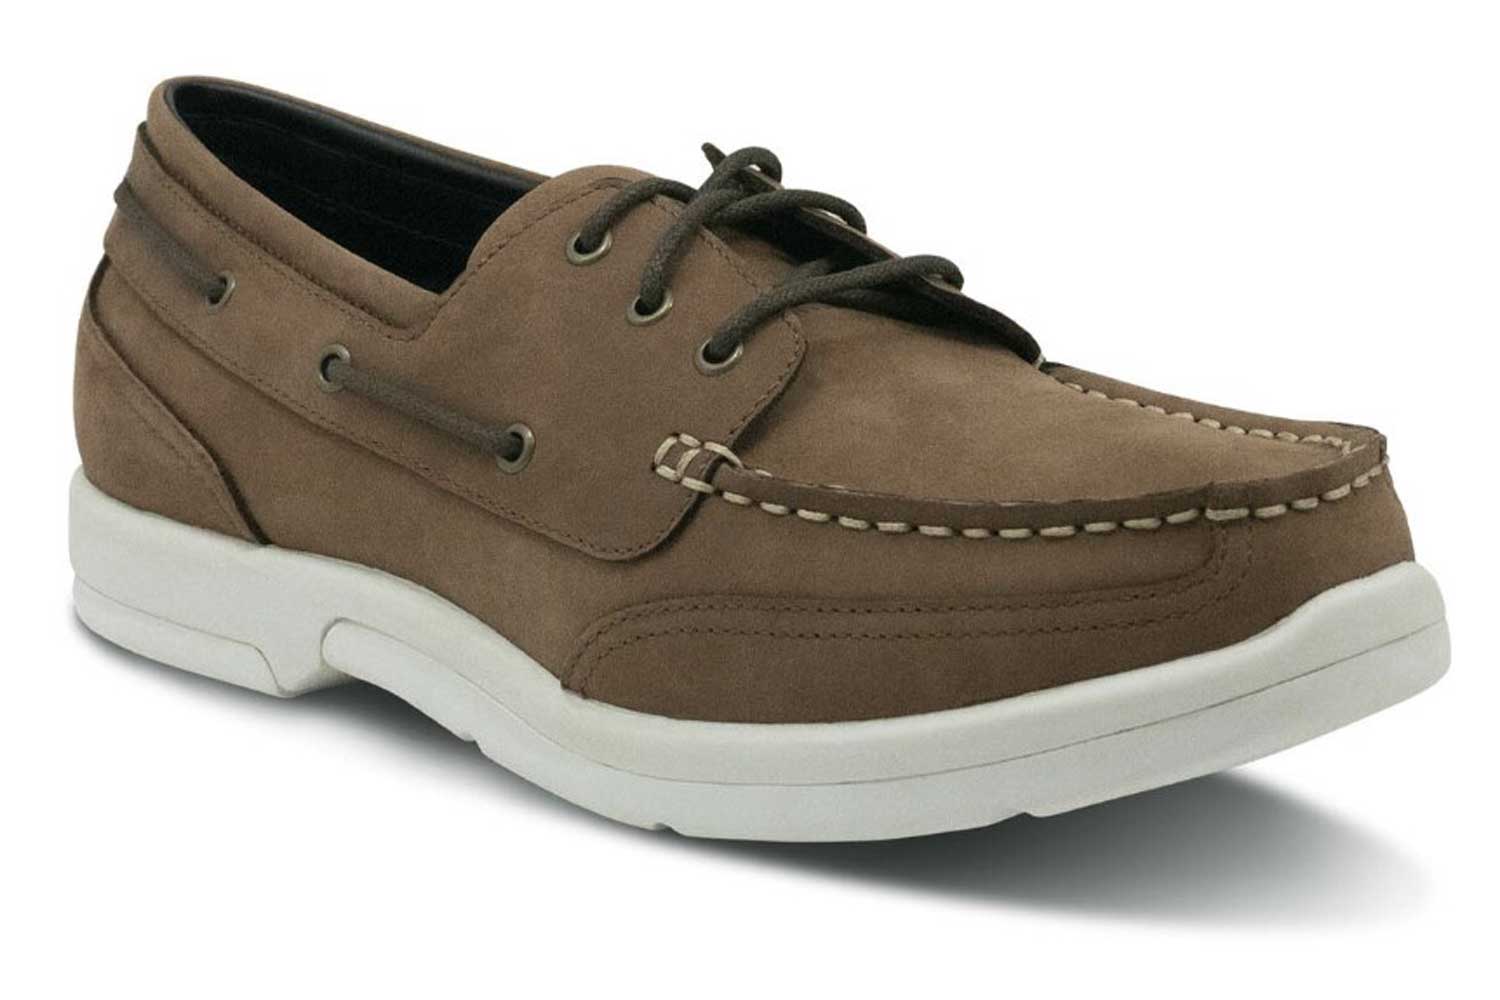 Apex Shoes LT820M Men's Boat Shoe - Comfort Orthopedic Diabetic Shoe - Extra Depth For Orthotics - Extra Wide